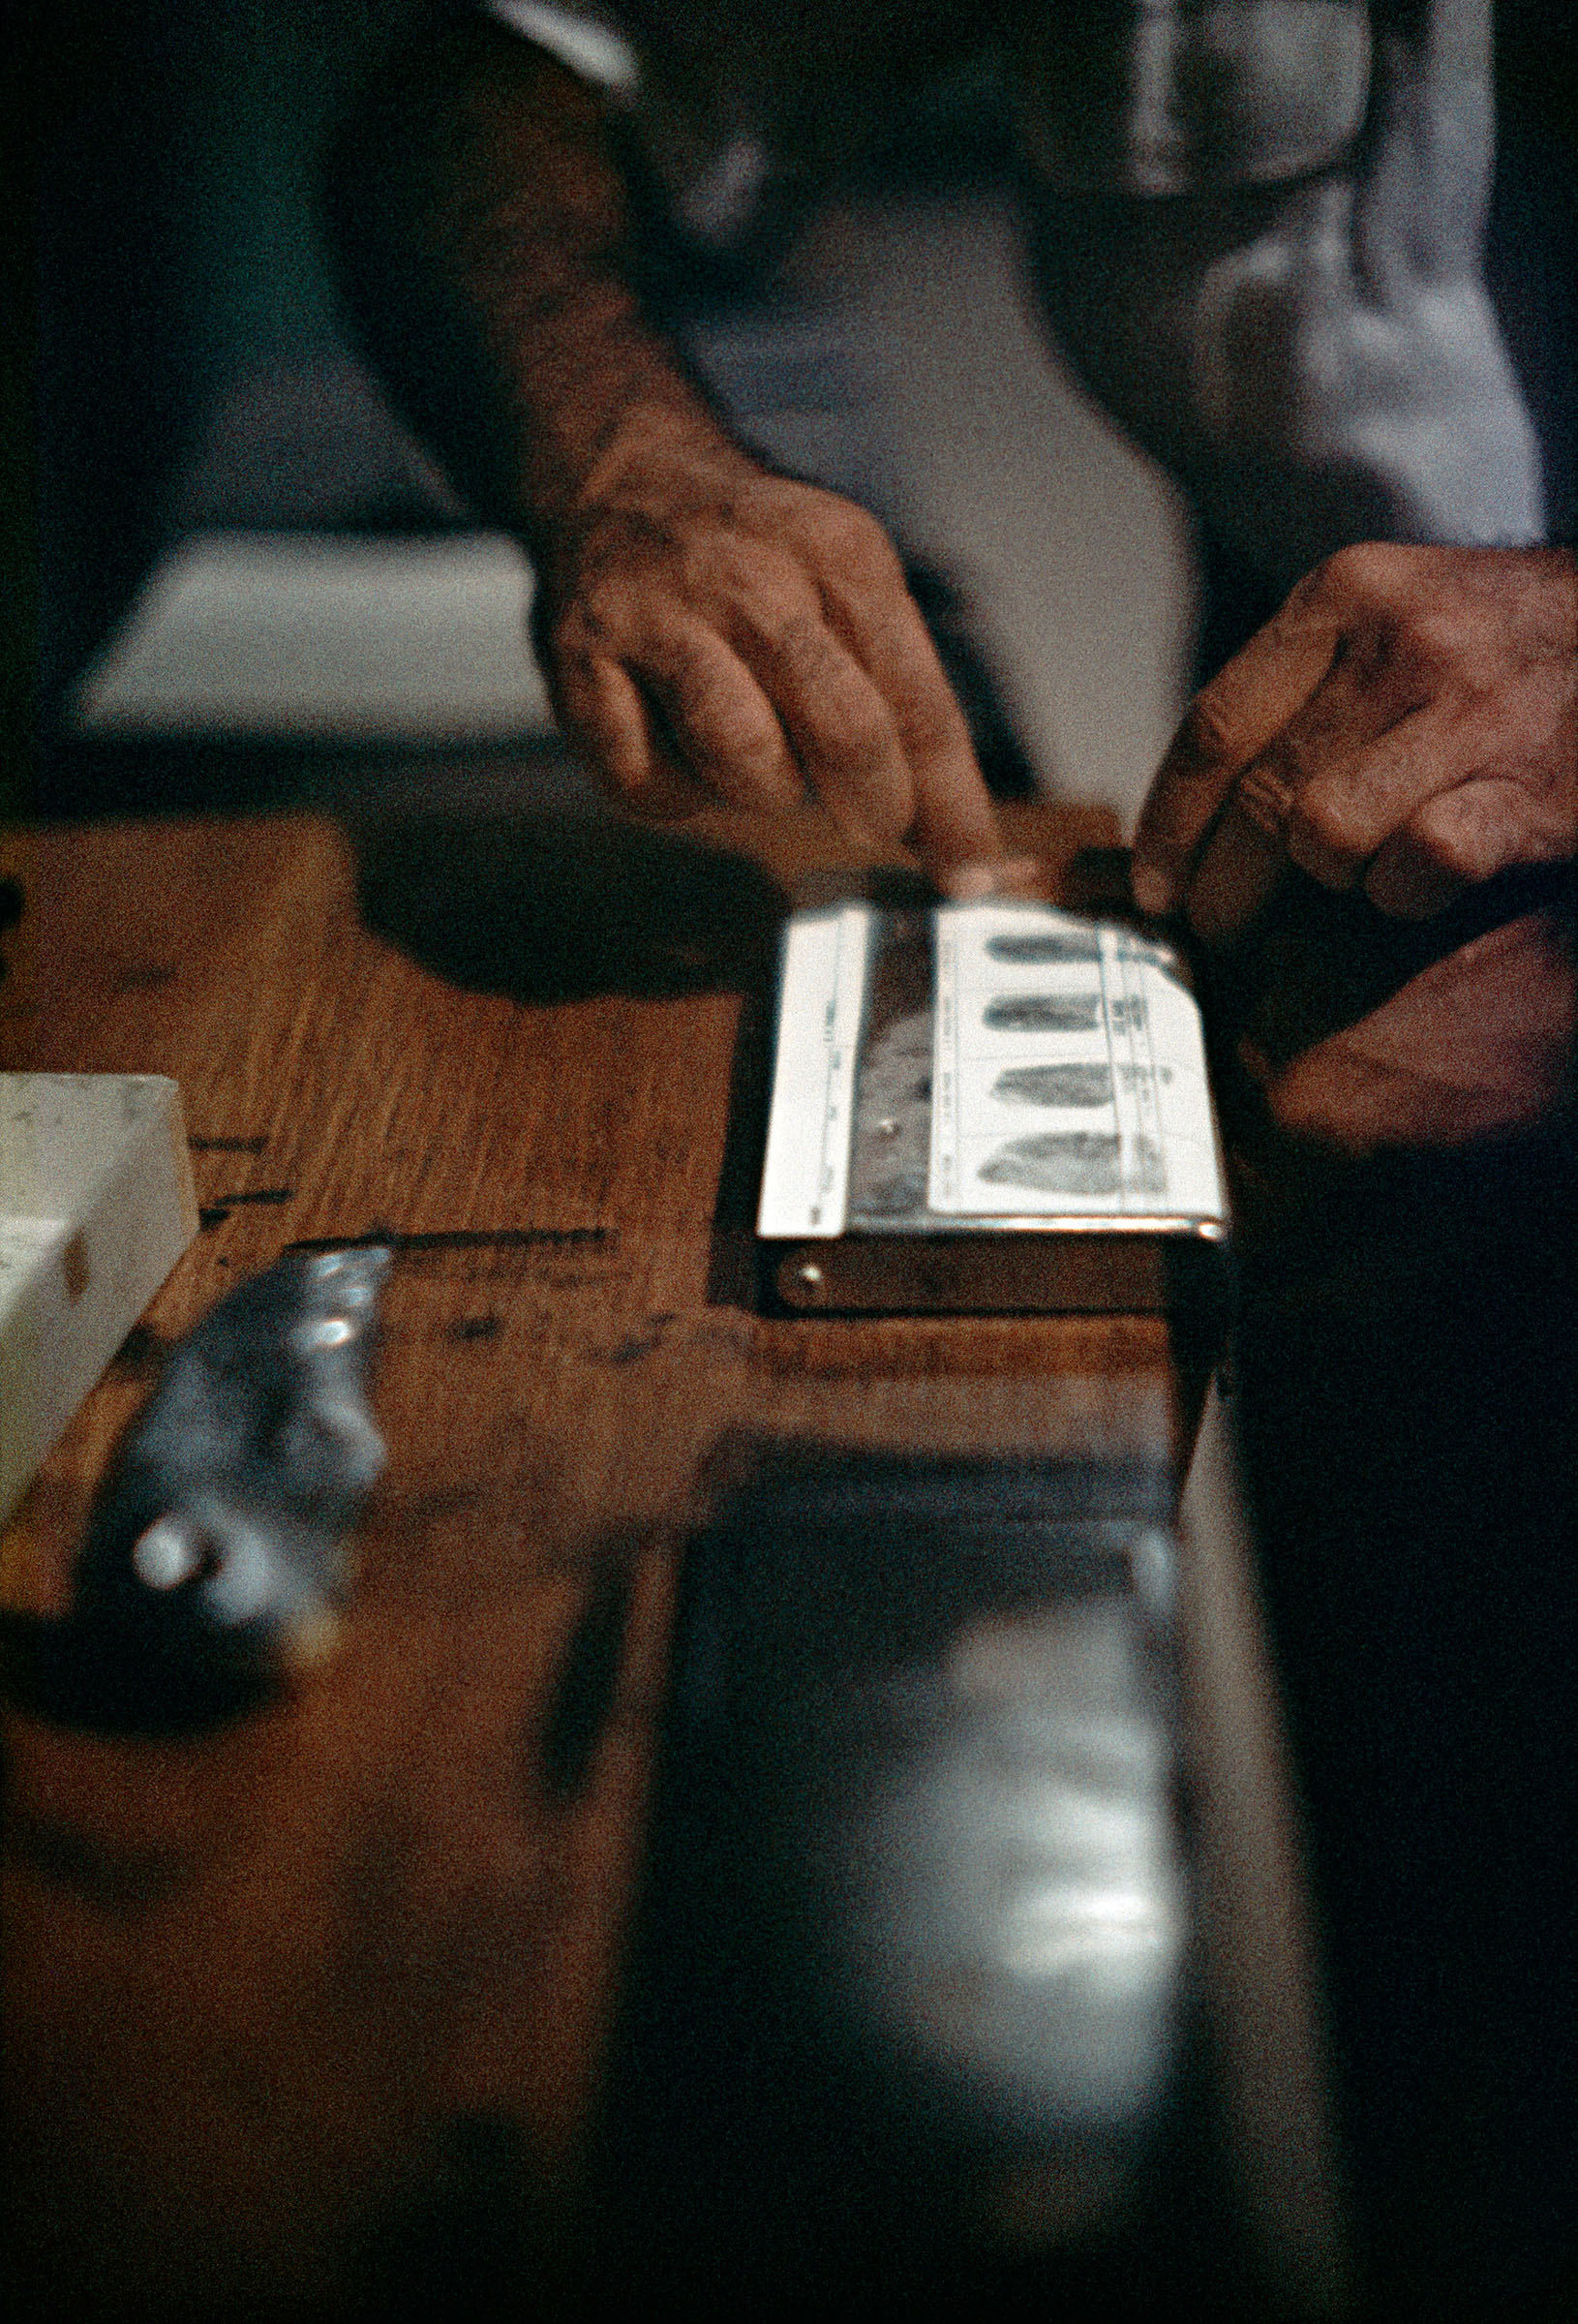 Fingerprinting Addicts for Forging Prescriptions, Chicago, Illinois, 1957 (© Courtesy The Gordon Parks Foundation)